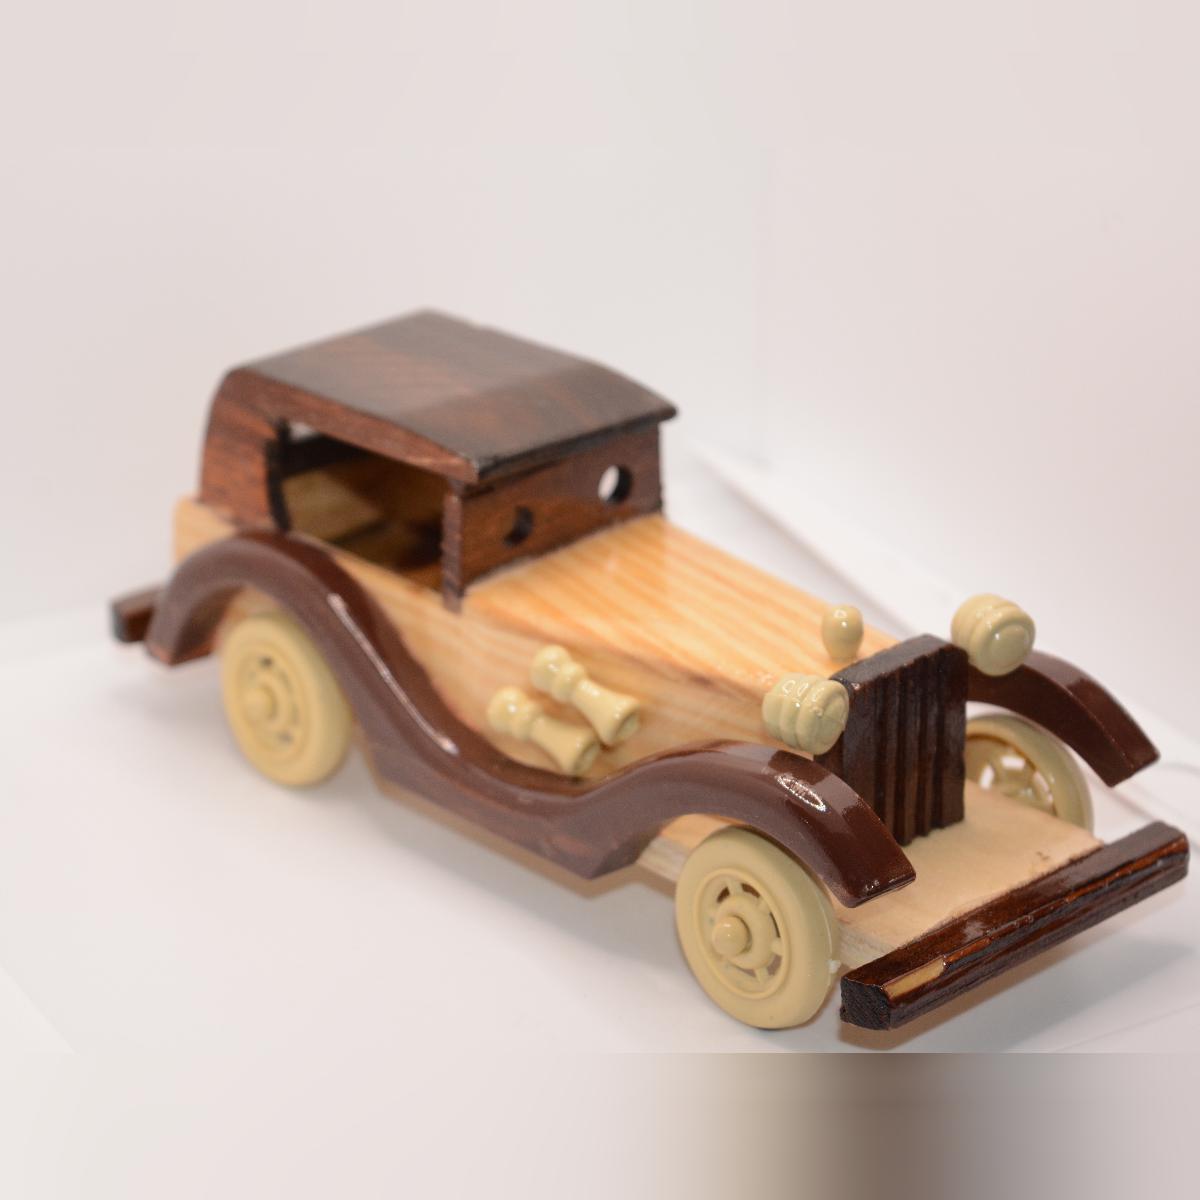 Channapatna toy vintage car